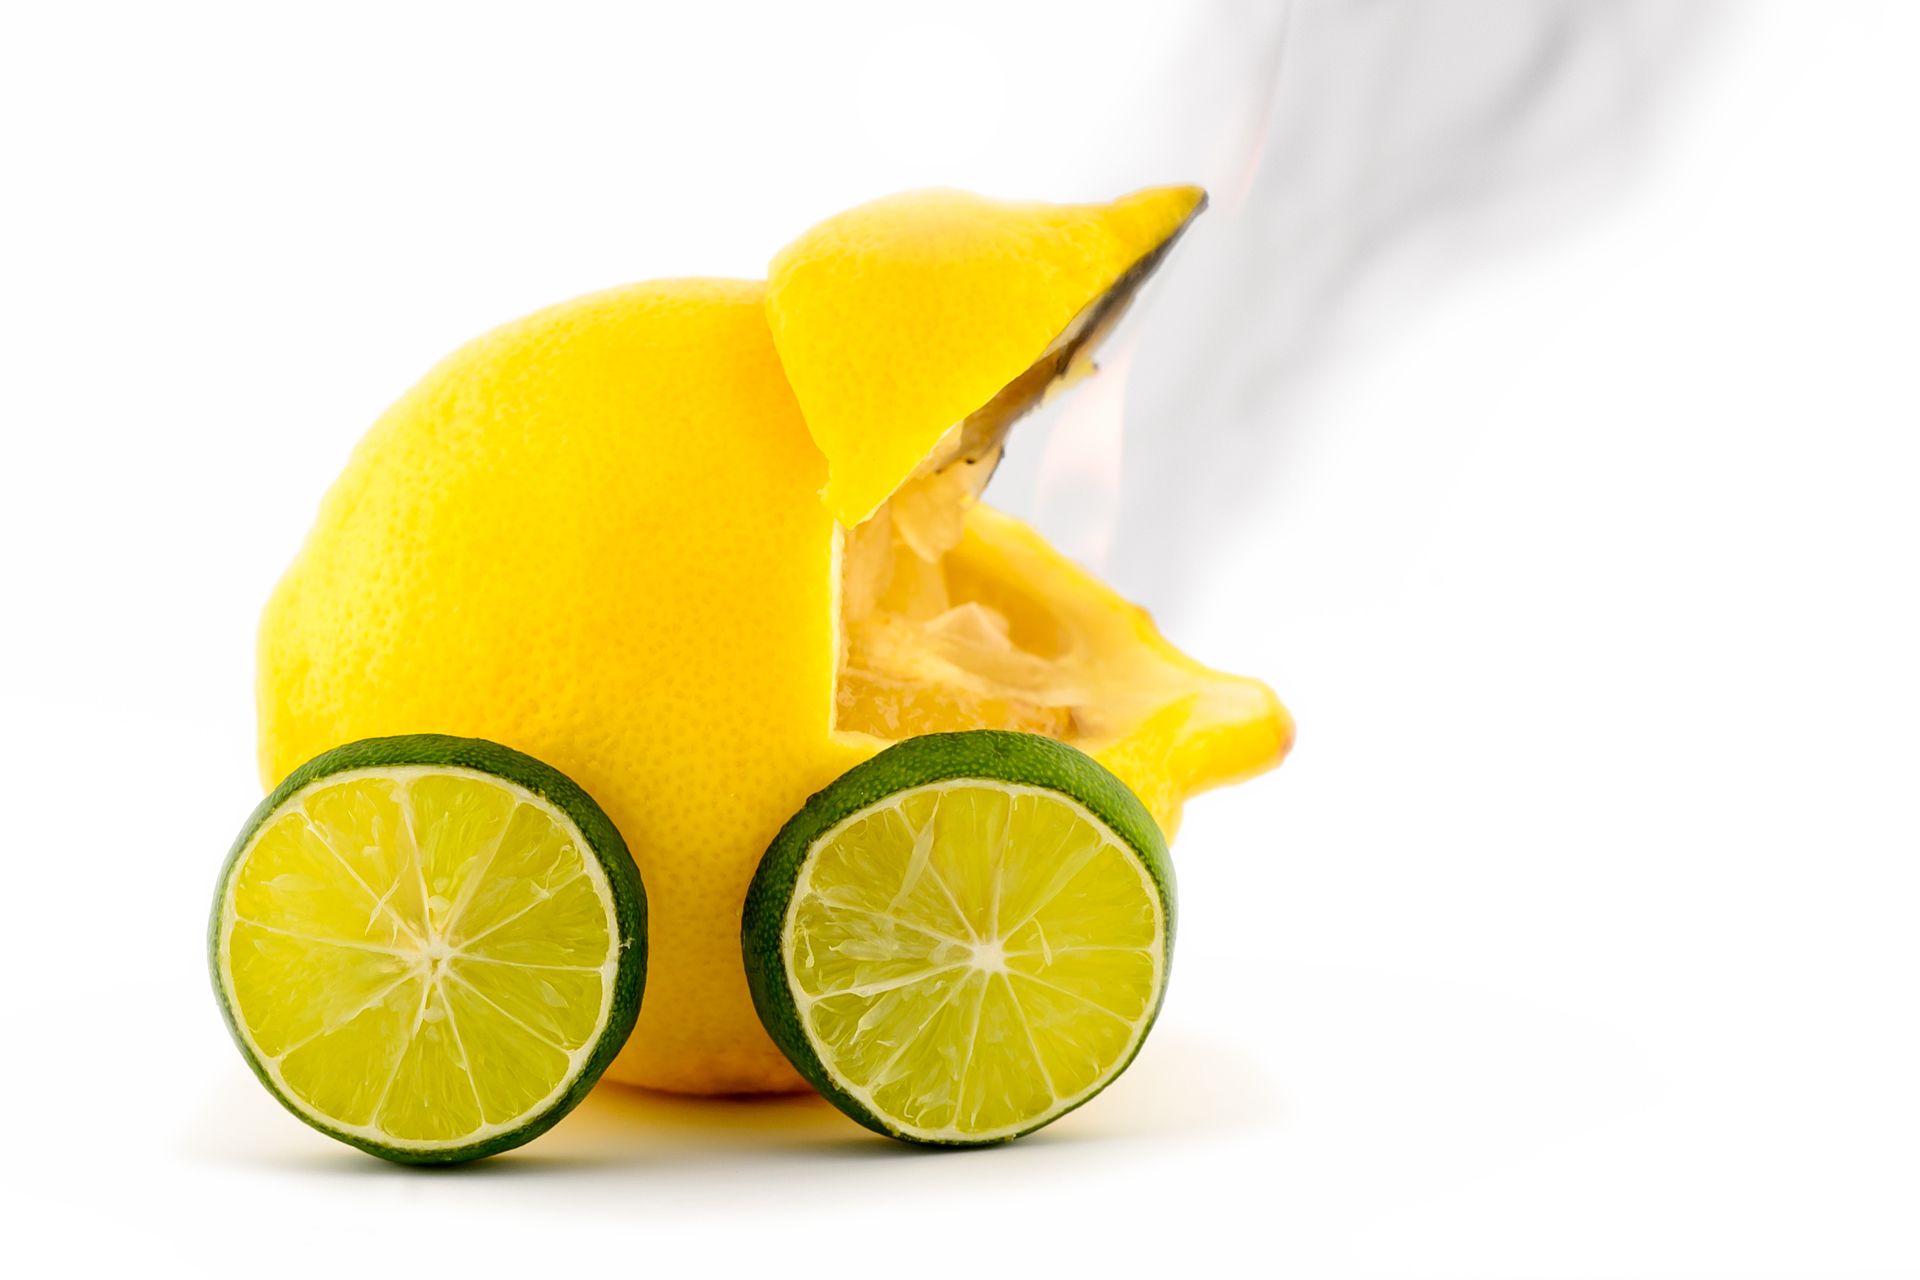 Anti-Lemon Law